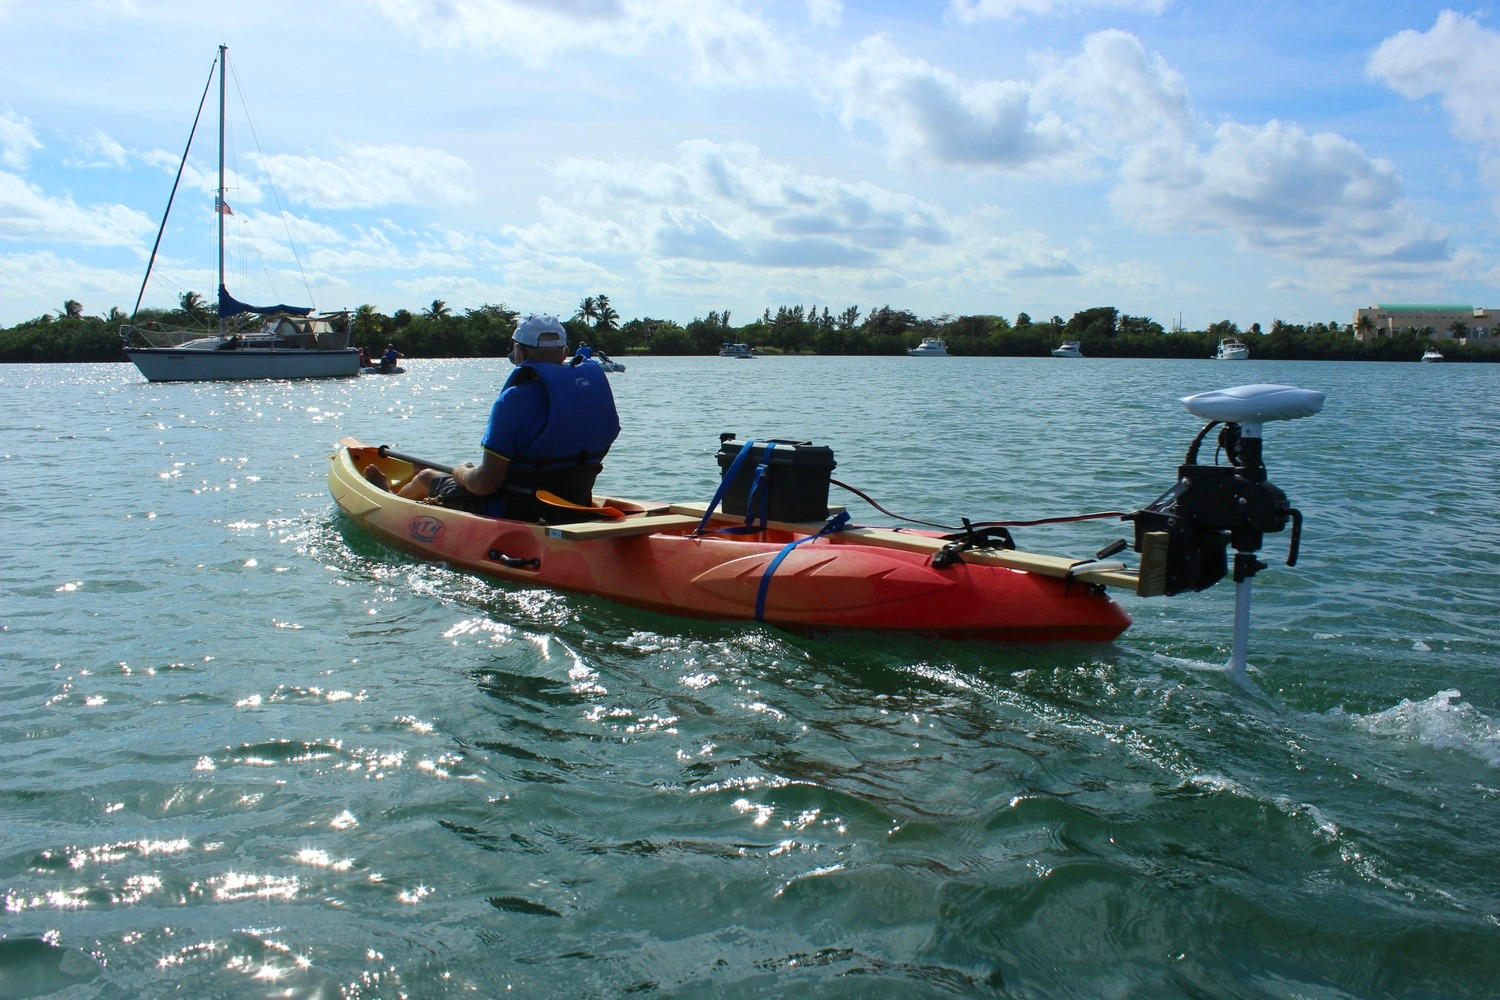 Stern mounted kayak trolling motor with tiller steering.